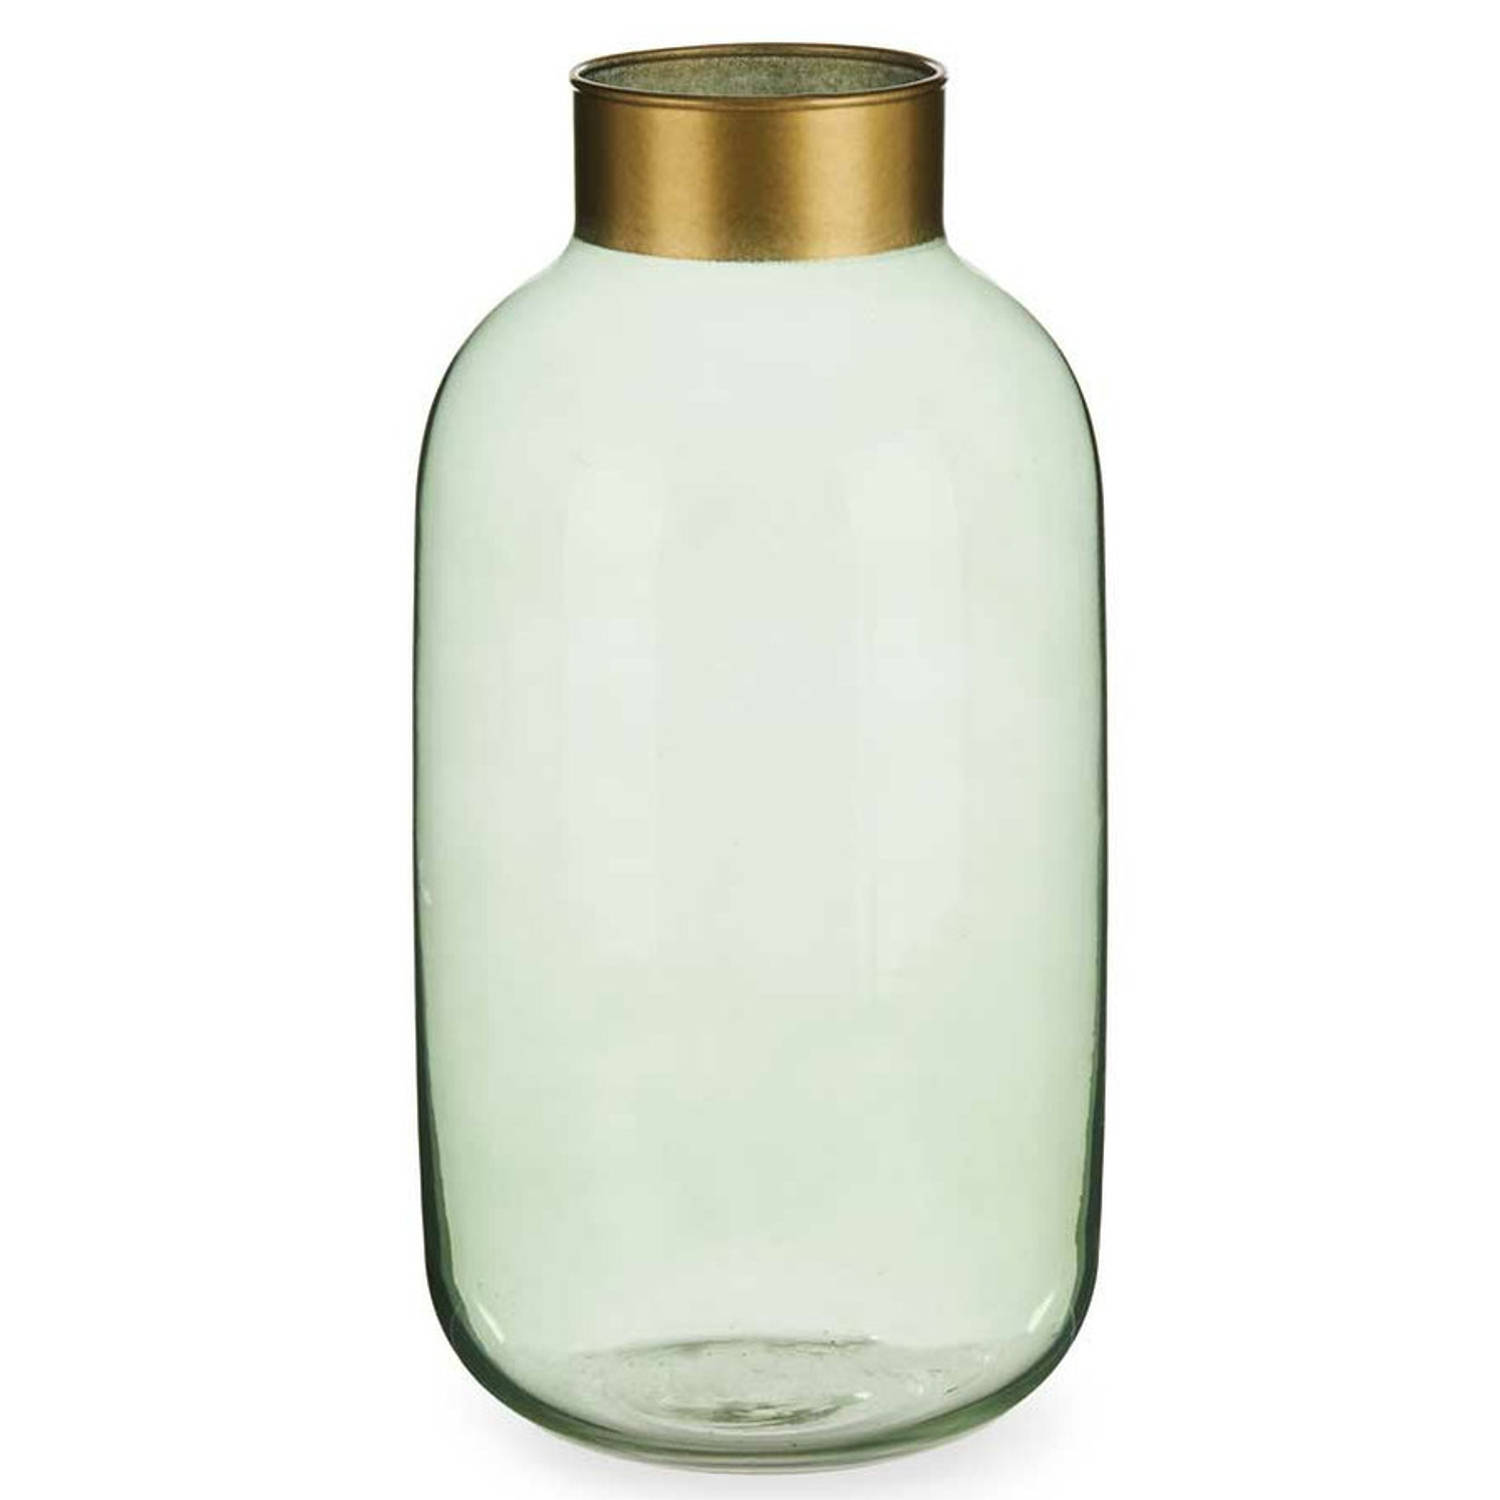 Bloemenvaas luxe decoratie glas groen transparant-goud 14 x 30 cm Vazen